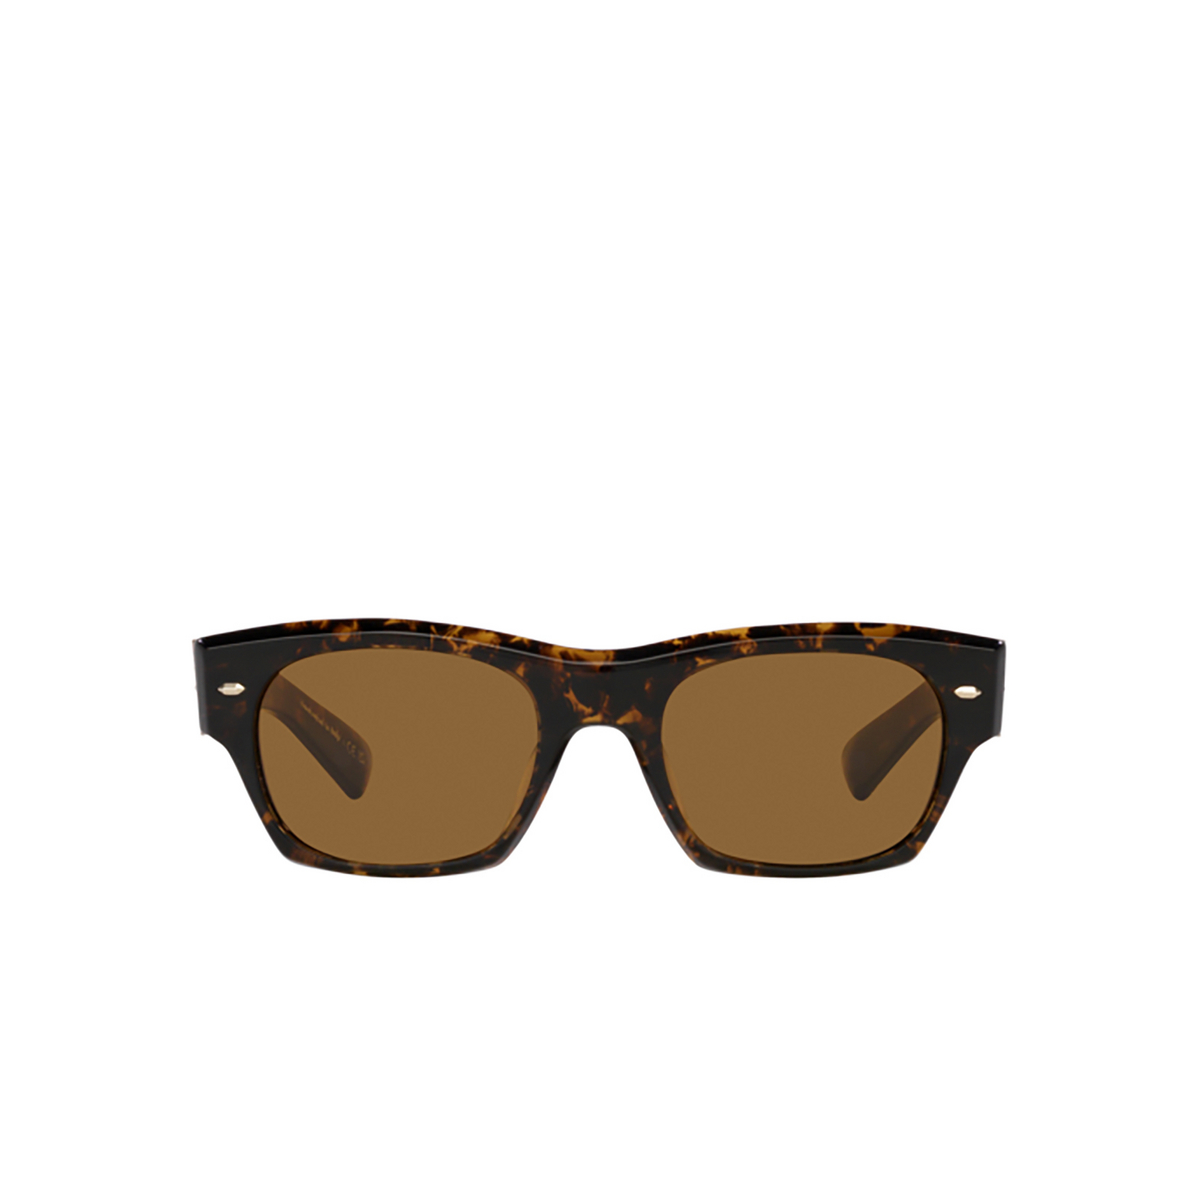 Oliver Peoples KASDAN Sunglasses 174753 Walnut Tortoise - front view